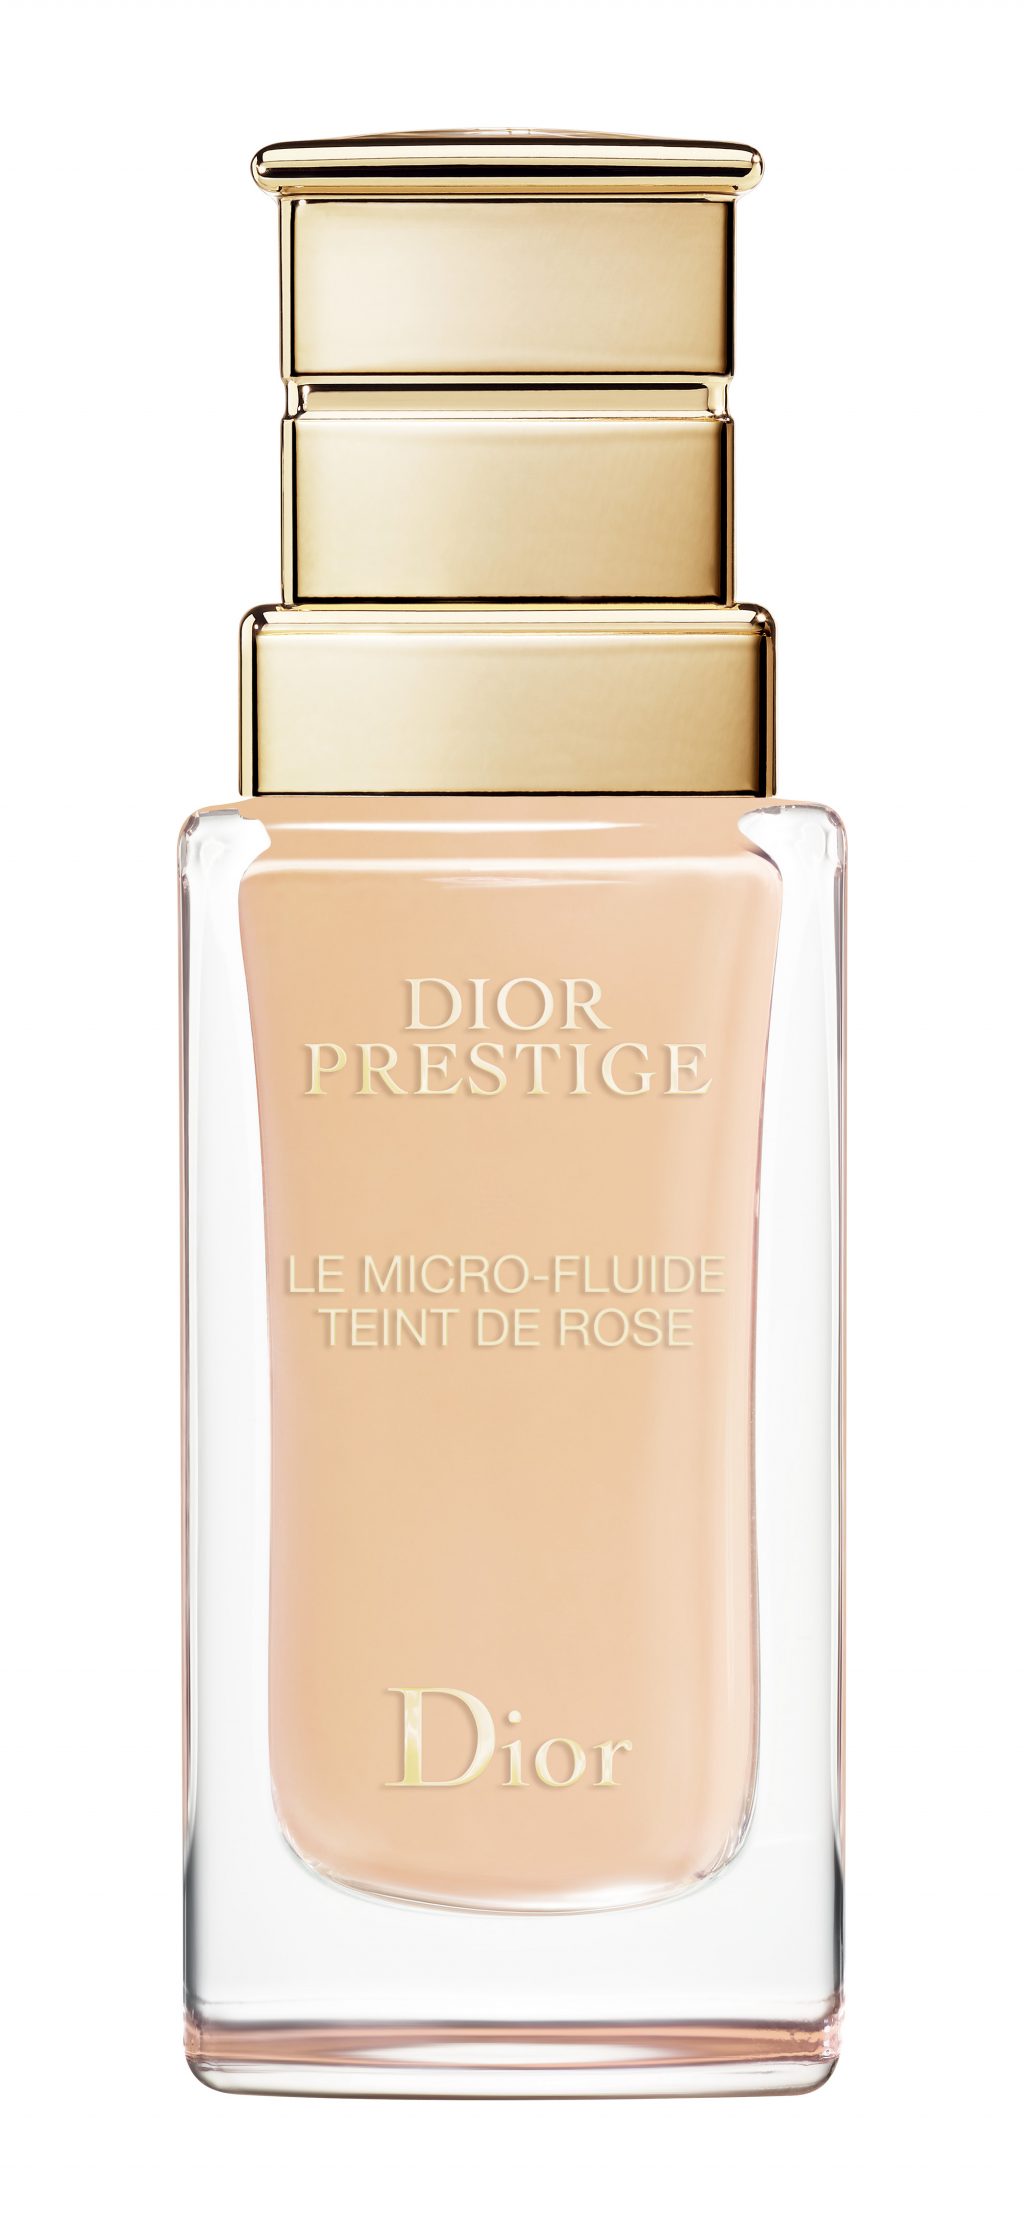 Dior Prestige Le Micro-Fluide Teint de Rose